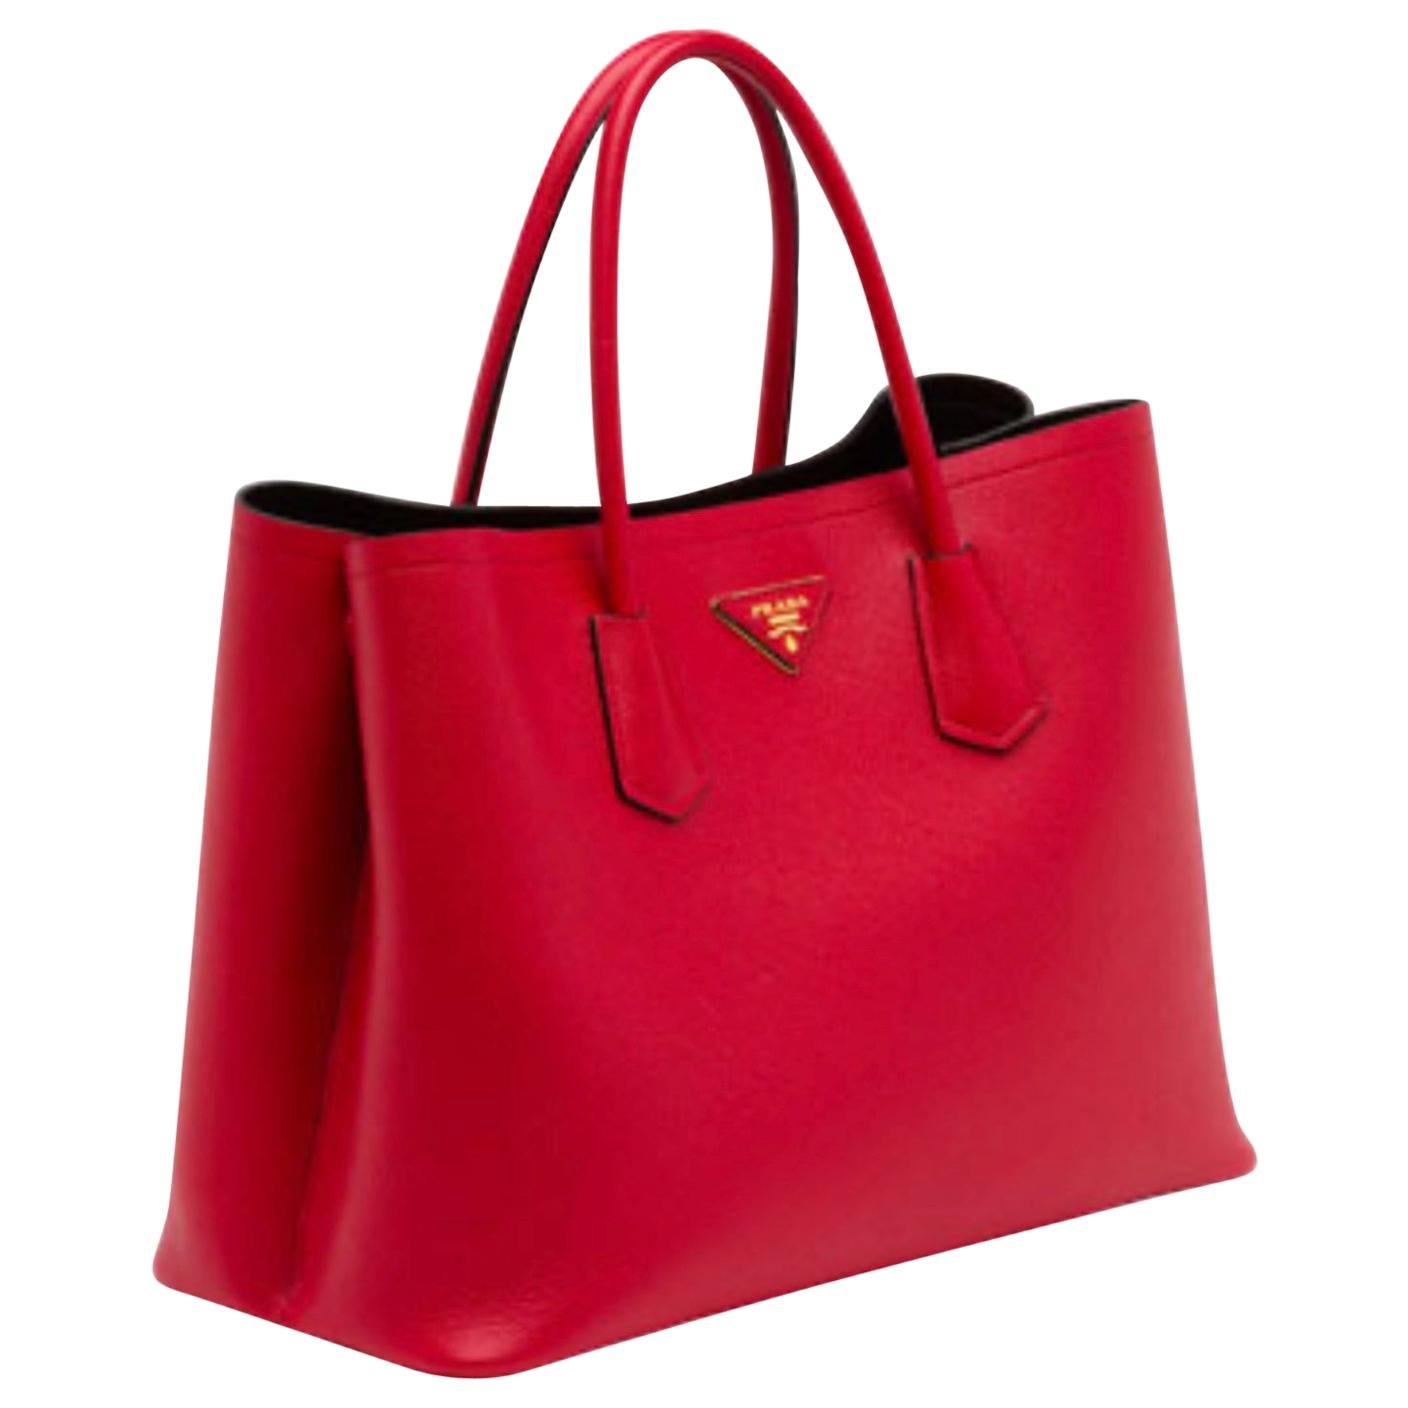 Prada Logo Saffiano Leather Shoulder Bag In Red